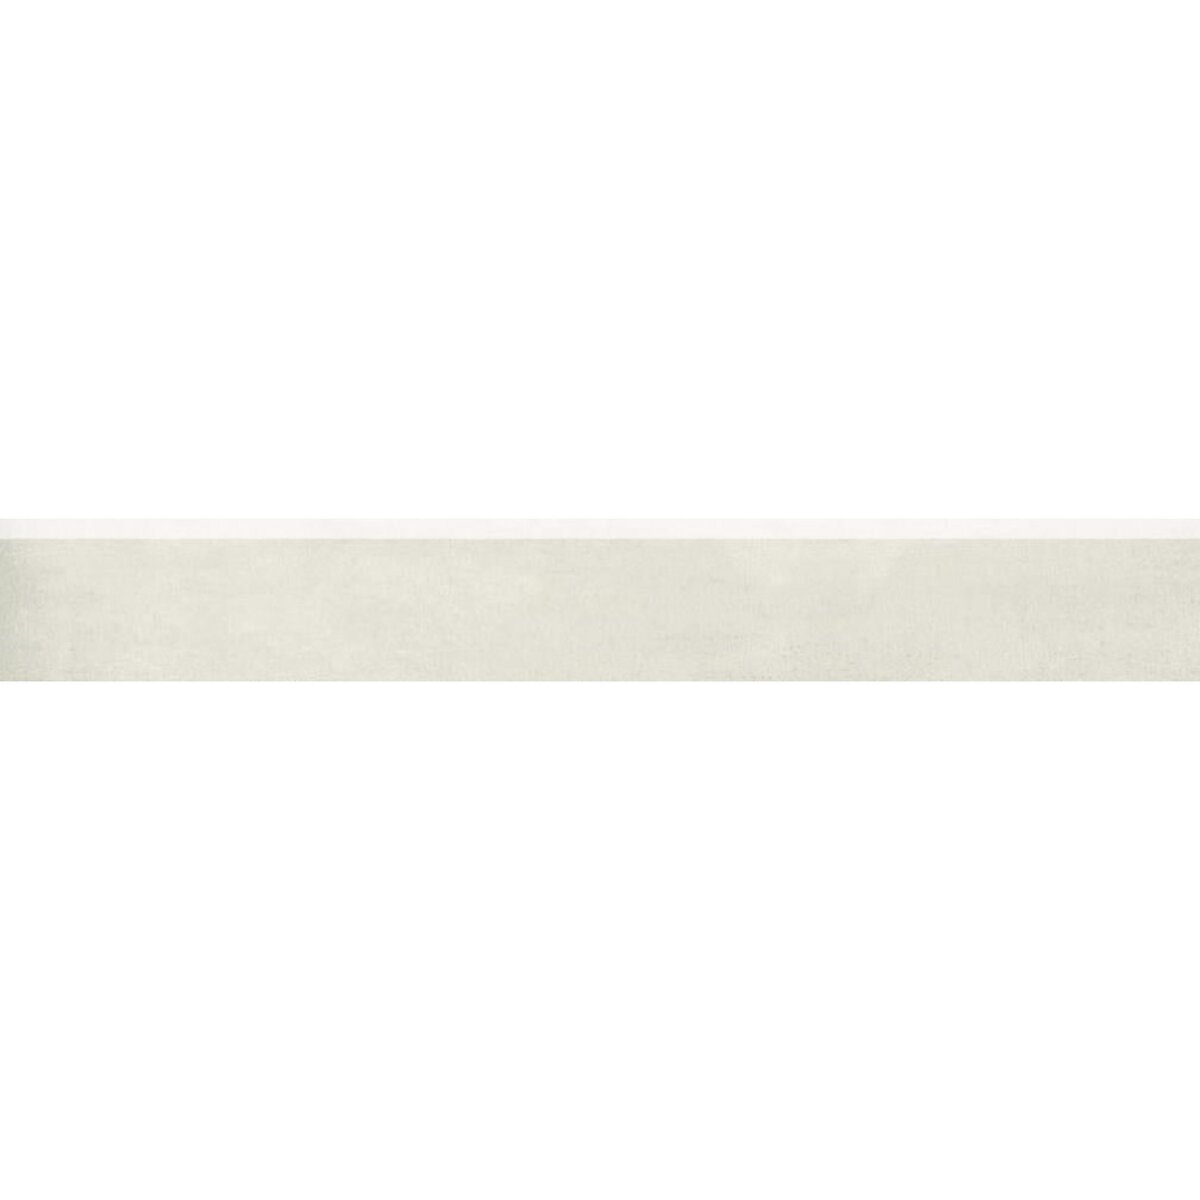 CENTRALE BRICO blanc l.1 x L.61 cm x Ep.9 mm